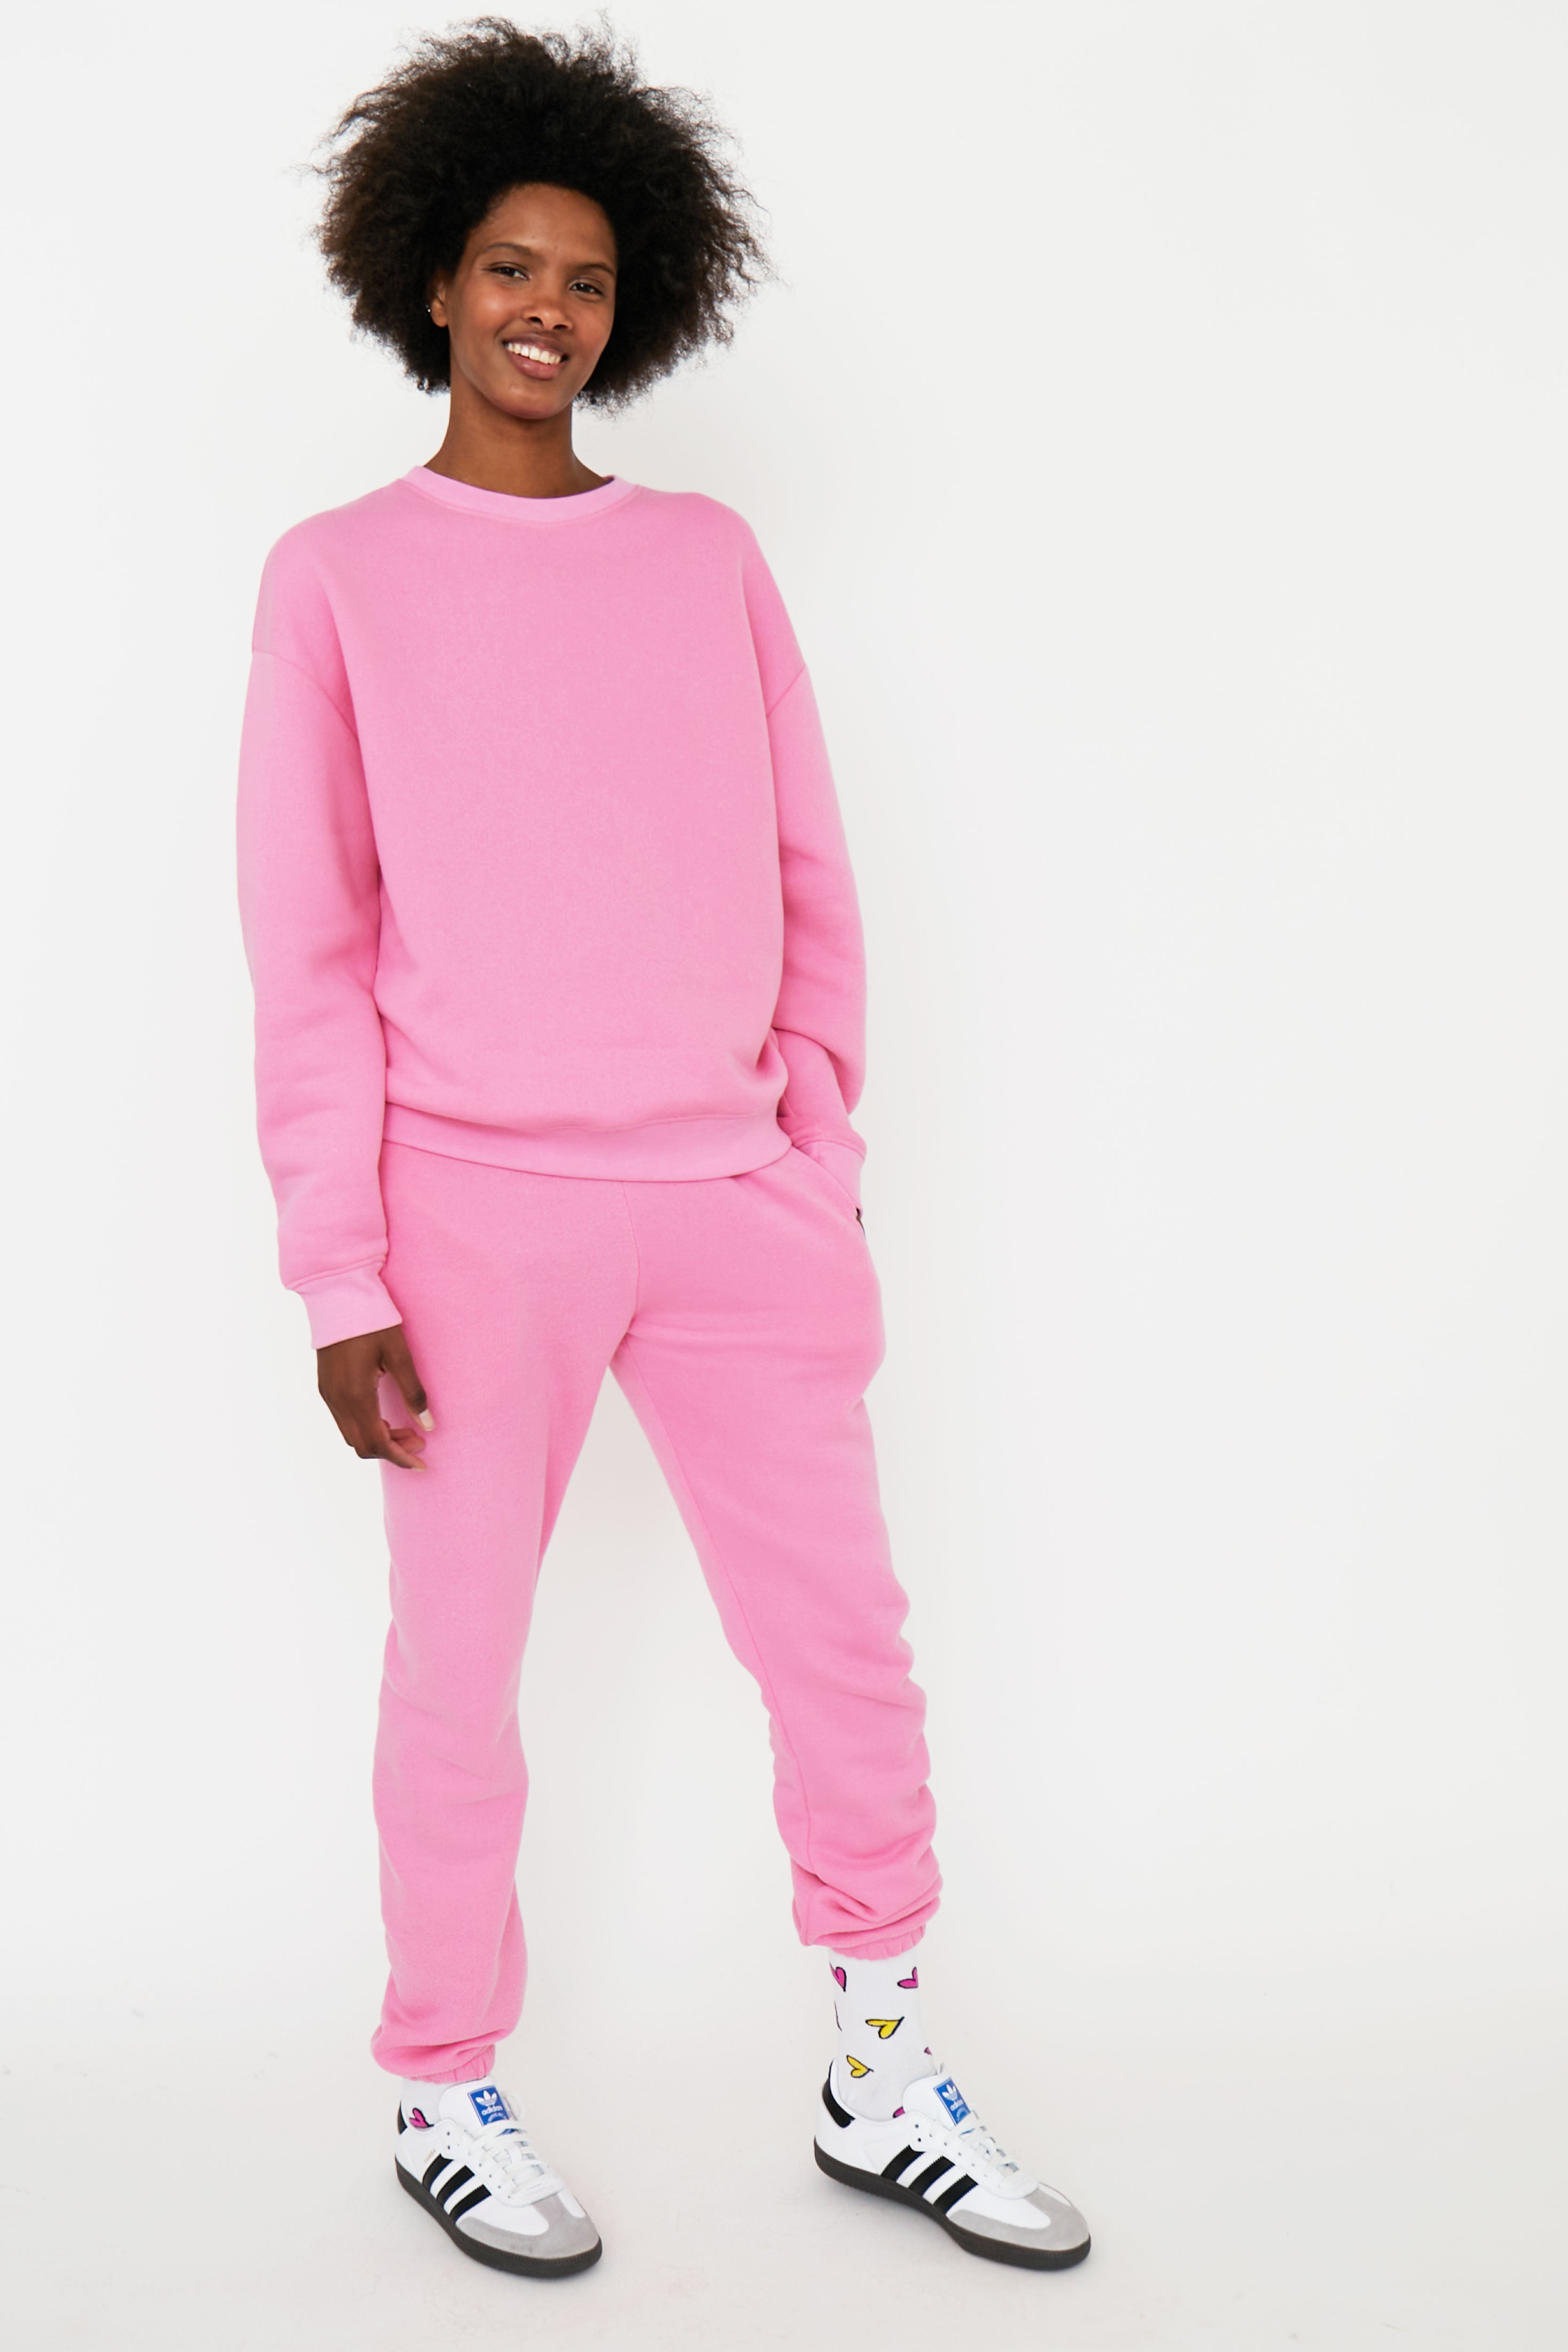 The Oversized Spongee Sweatshirt - Hot Pink